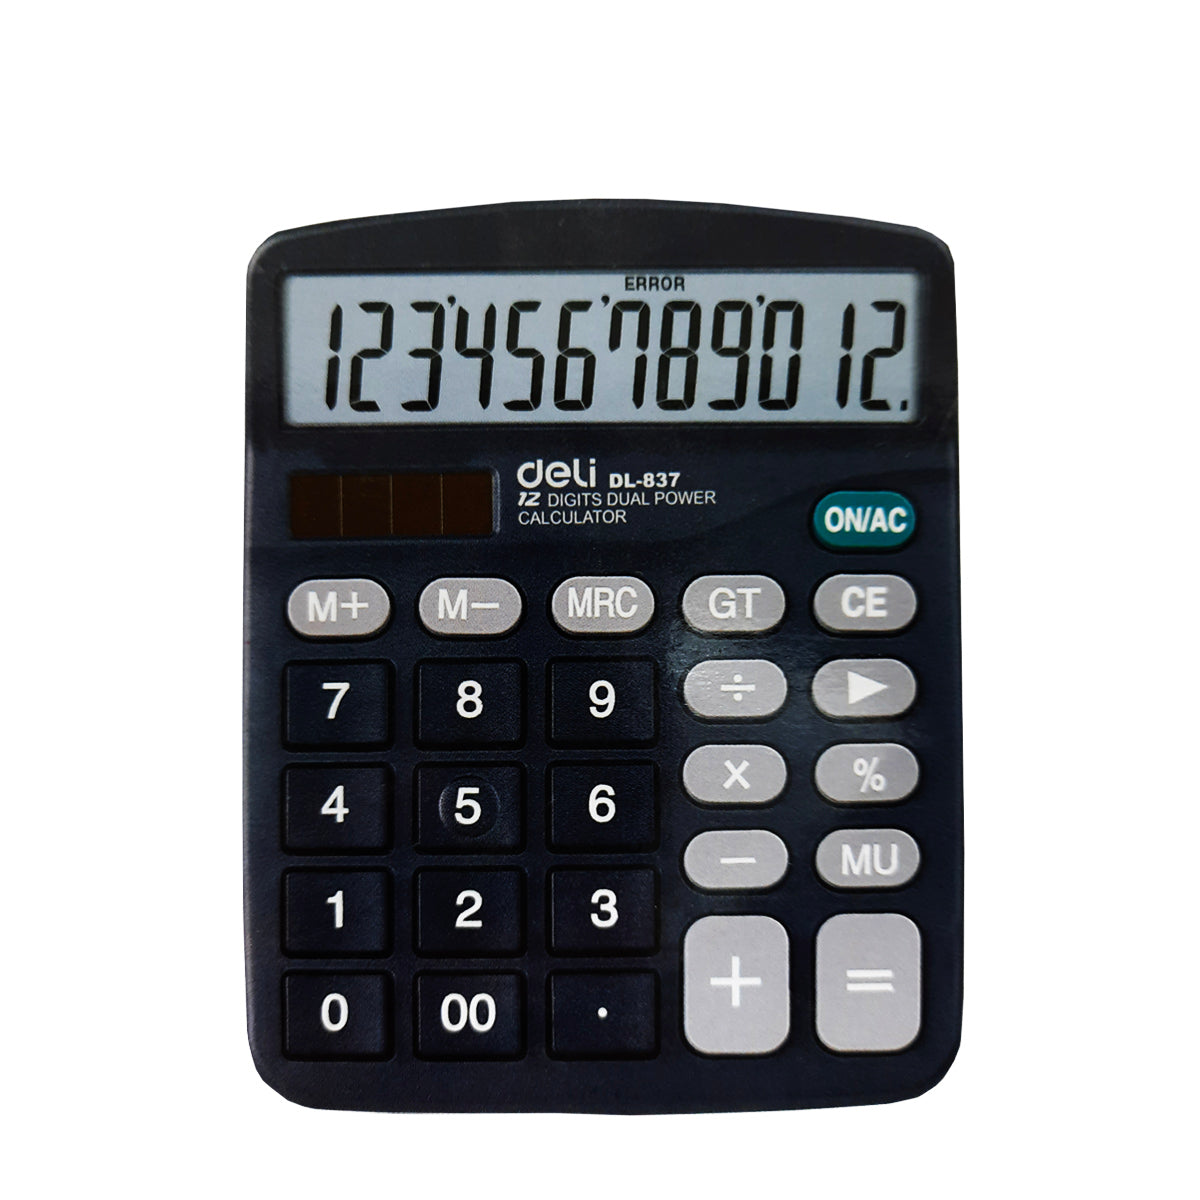 Deli 837 Small Size Financial Calculator 12 Digits from Najmaonline Best Calculator Online in Abu Dhabi Duabi uaE